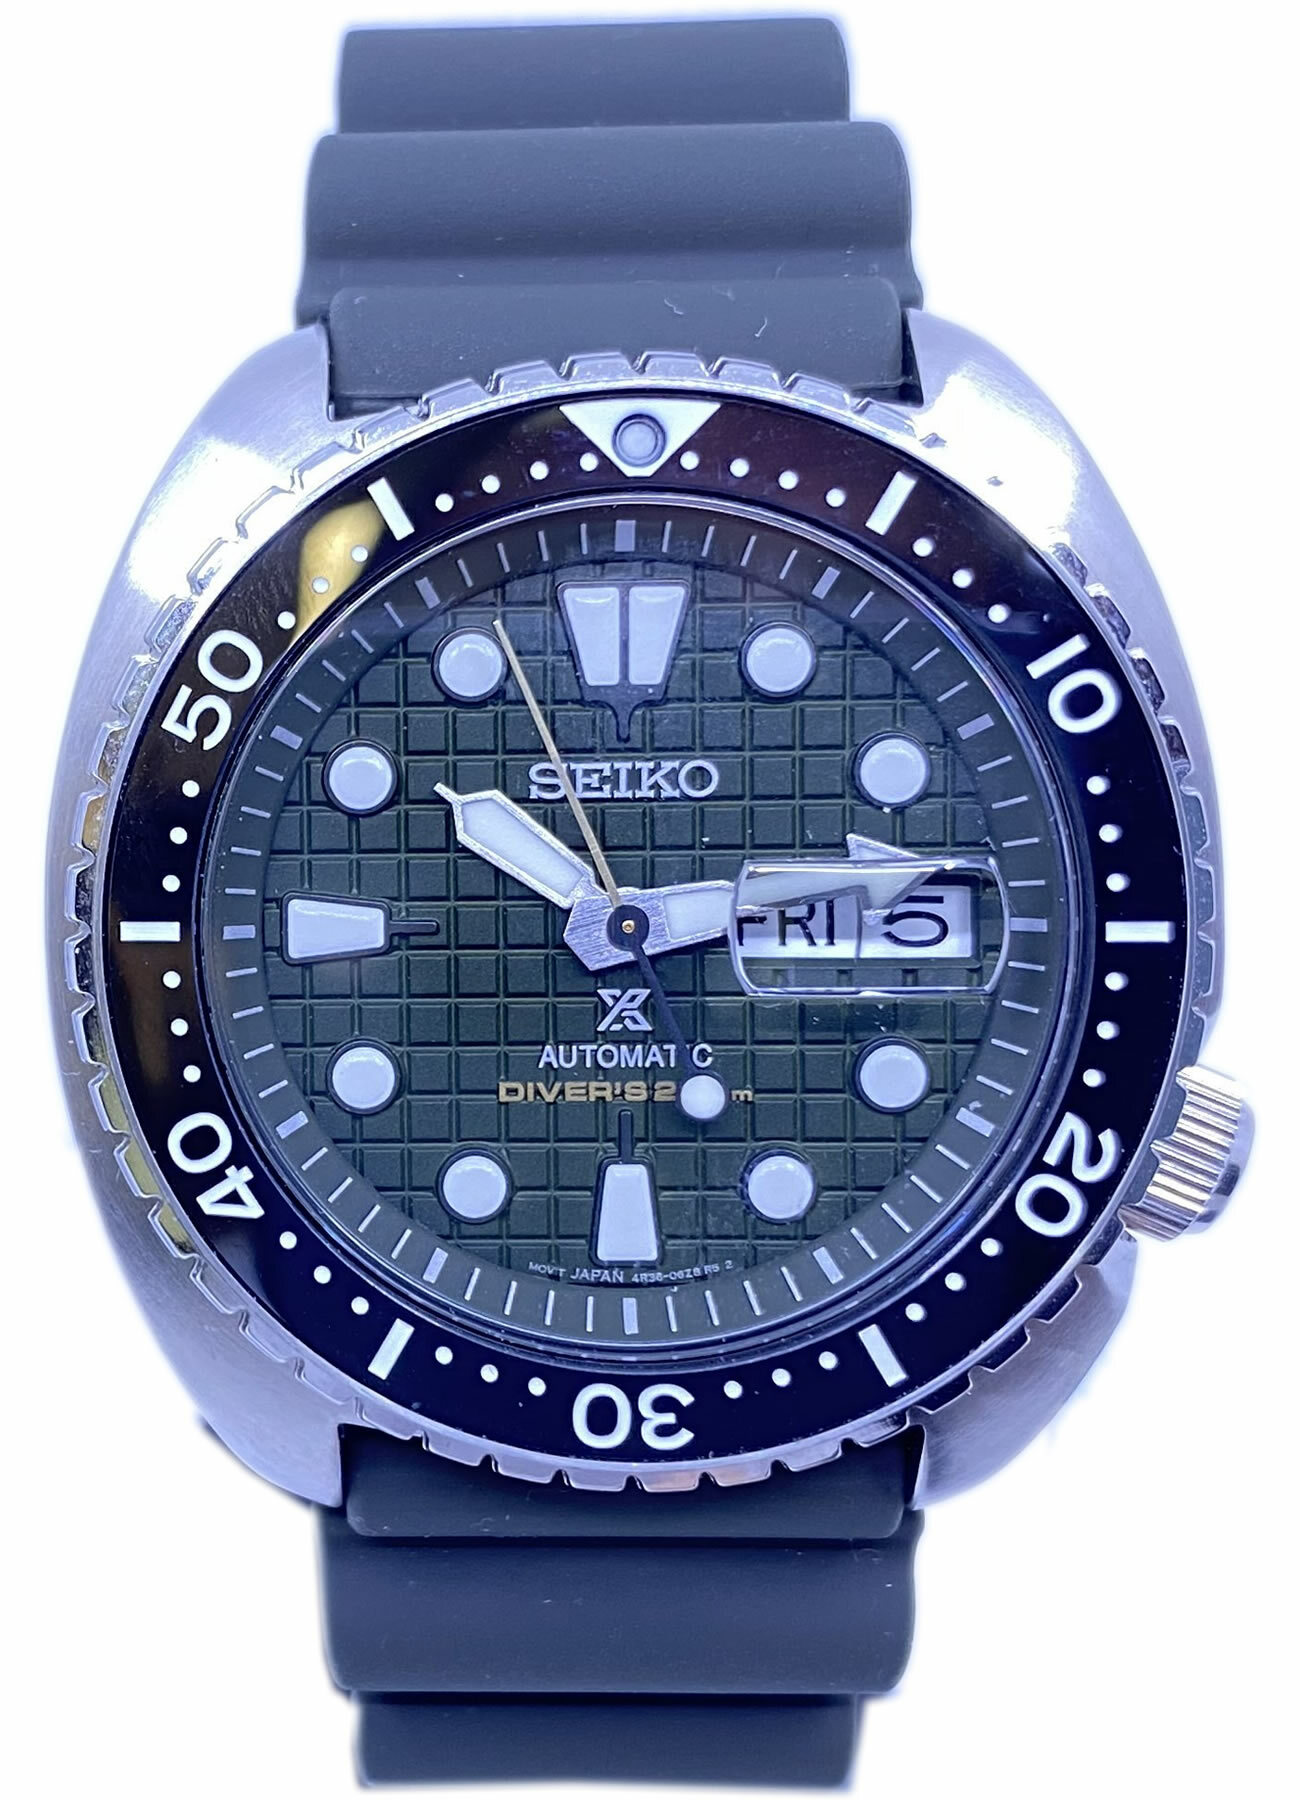 Seiko Prospex SRPE05 King Turtle - Exquisite Timepieces